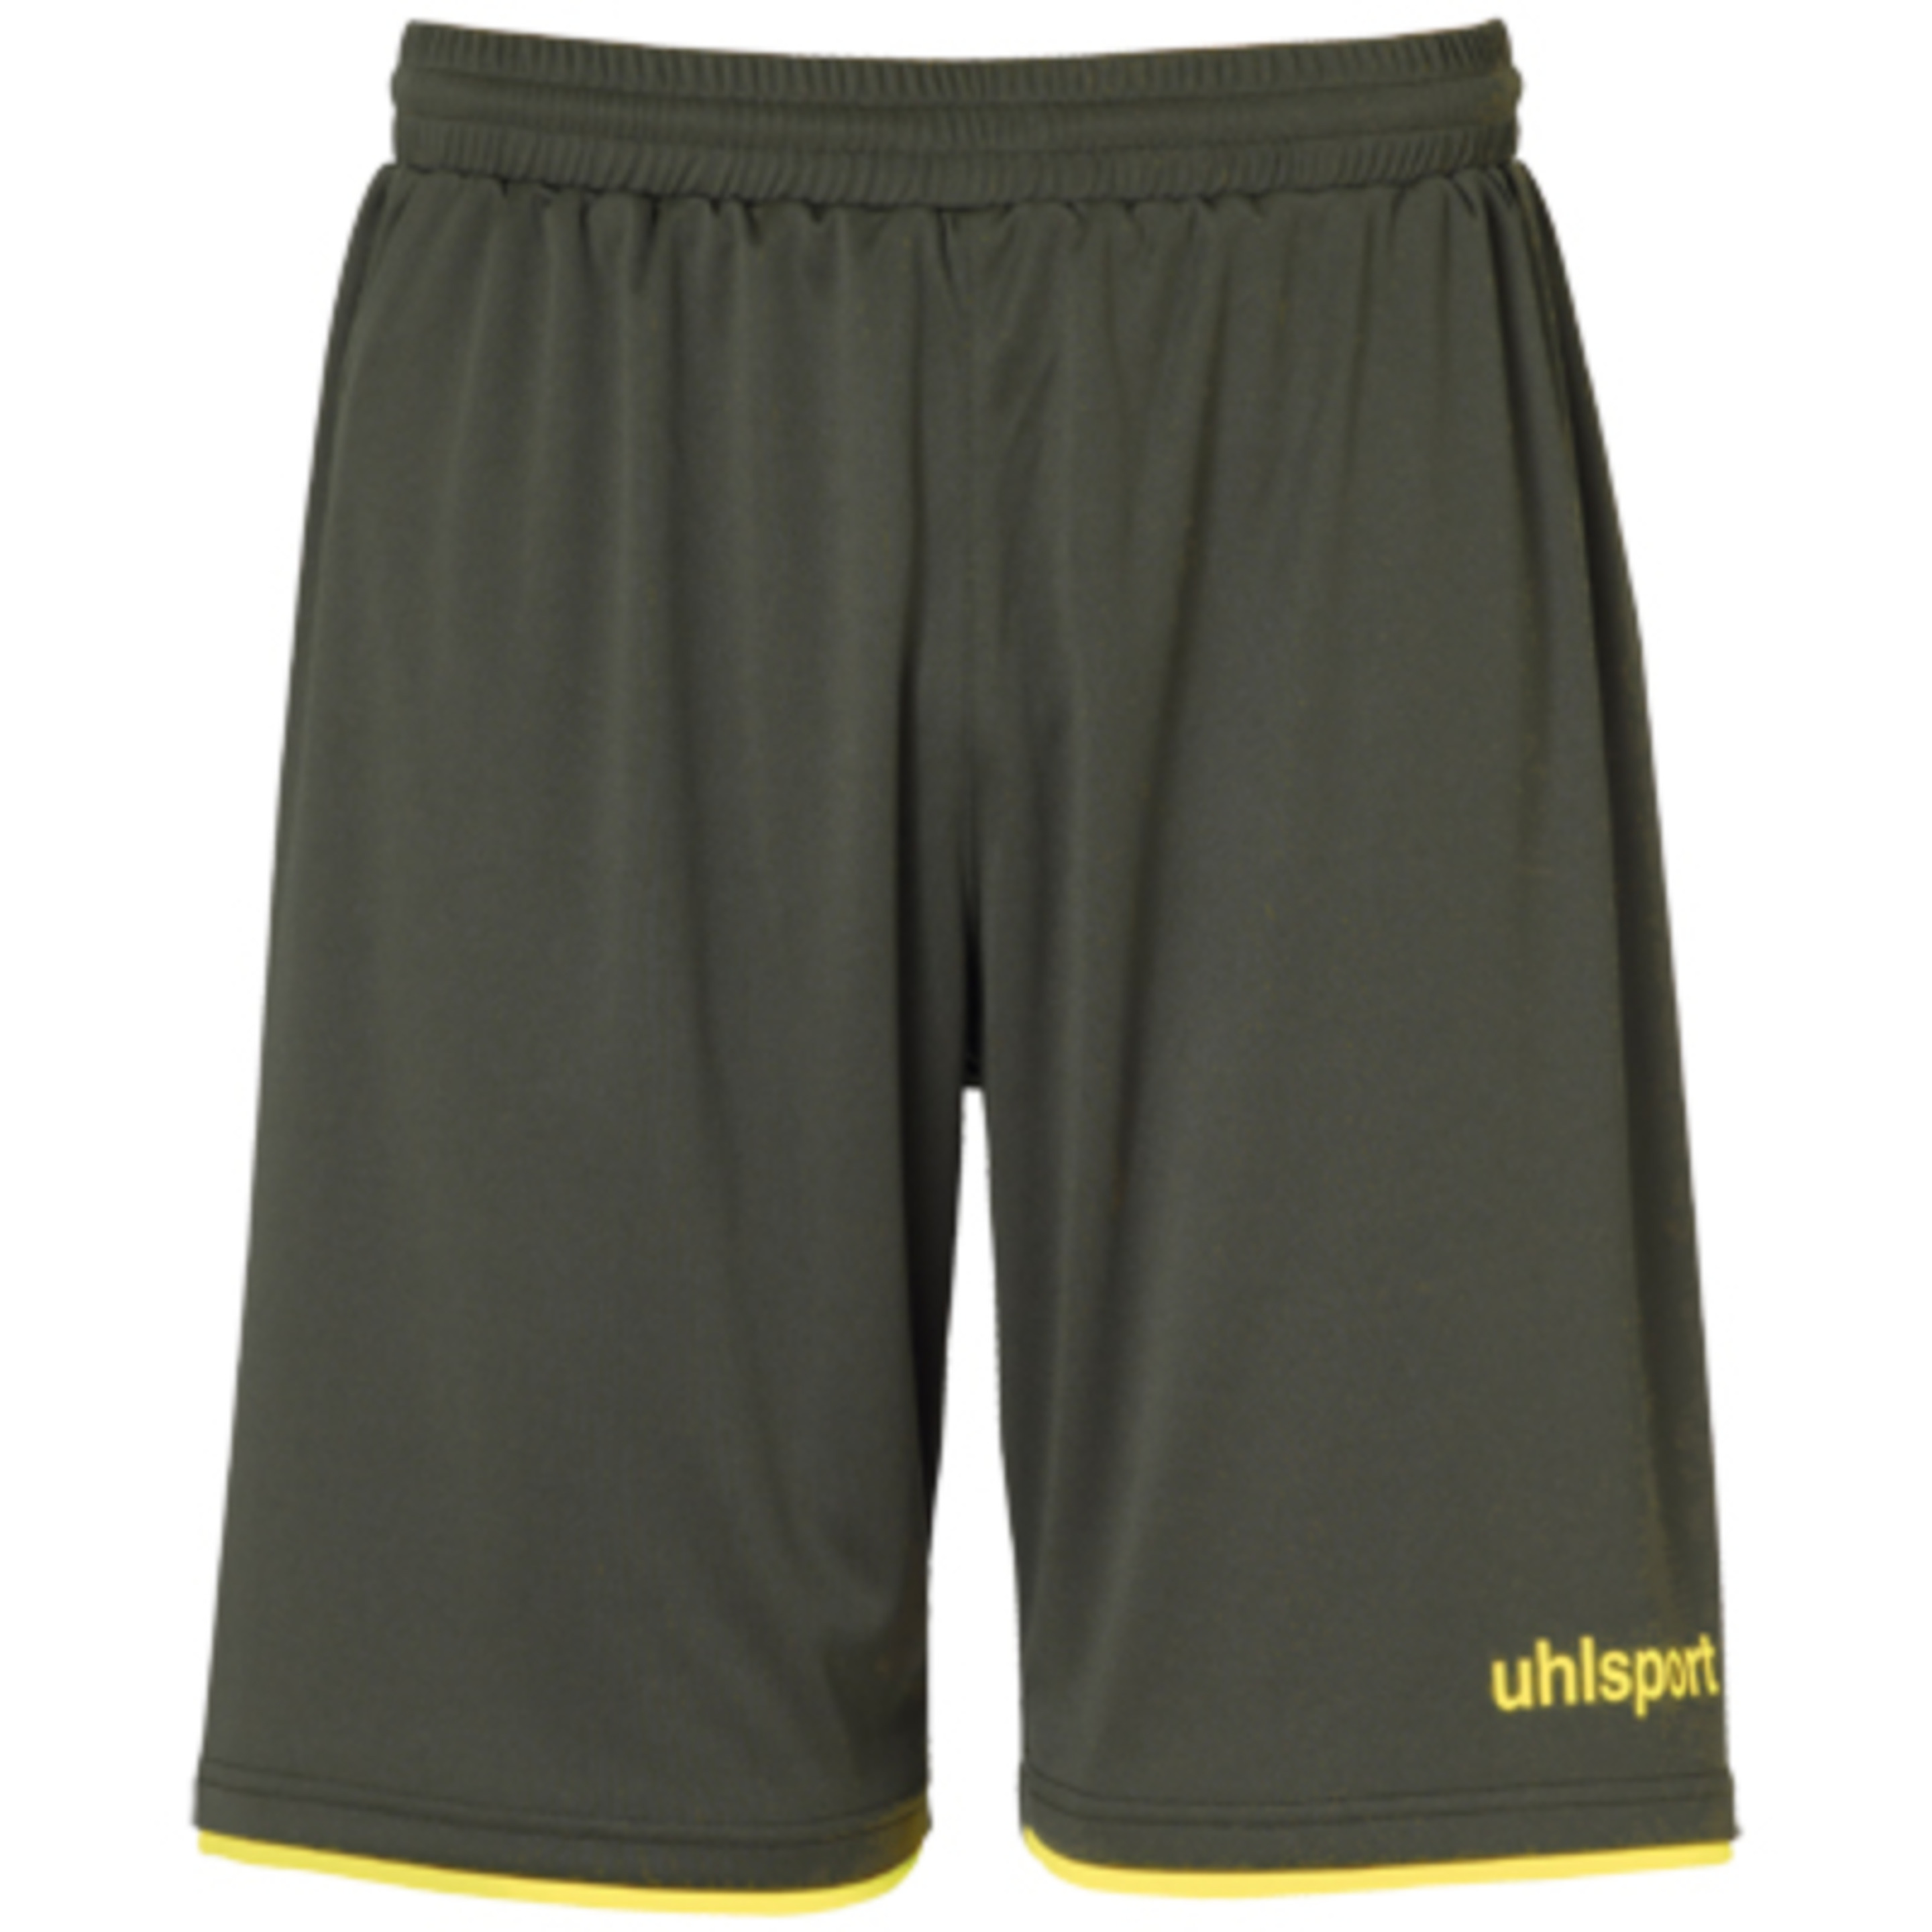 Club Shorts Dark Olive/amarillo Fluor Uhlsport - verde-oscuro - 